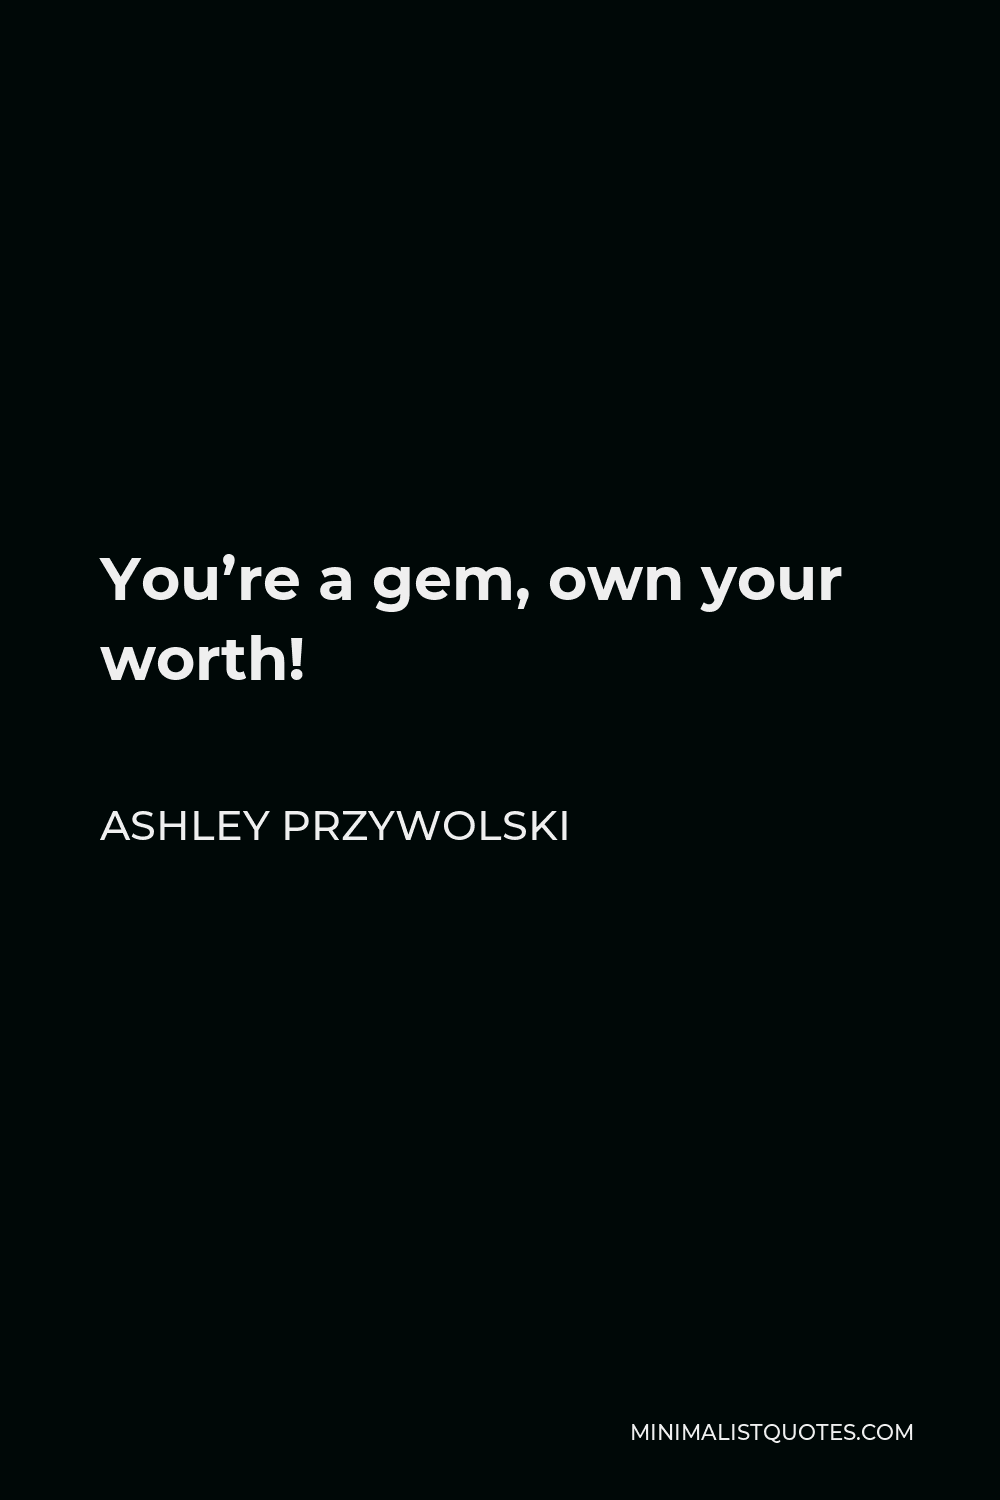 Ashley Przywolski Quote - You’re a gem, own your worth!